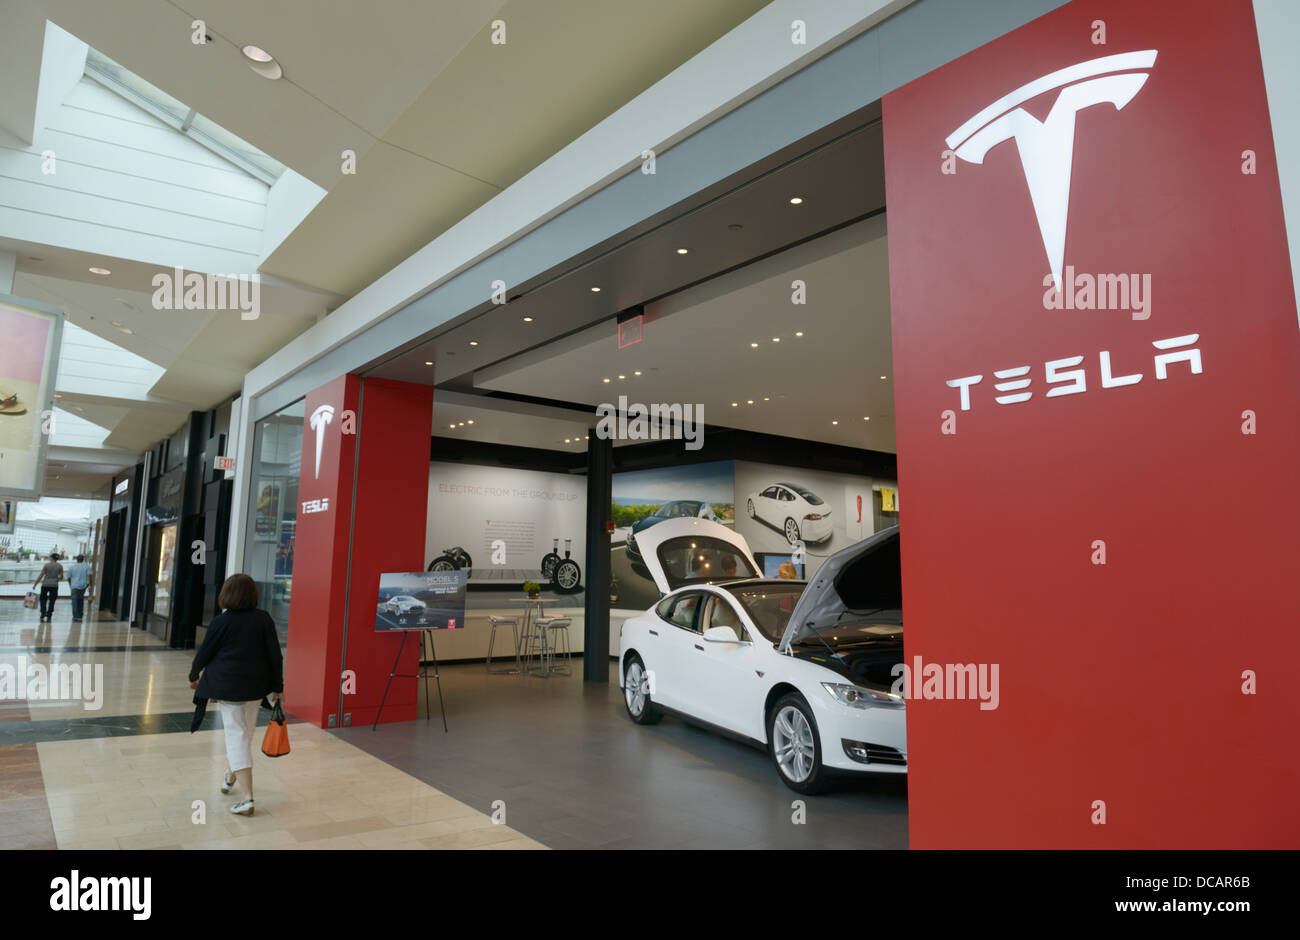 Tesla Elektro-Auto-Händler (Ladengeschäft) in eine Shopping-Mall, NJ, USA Stockfoto